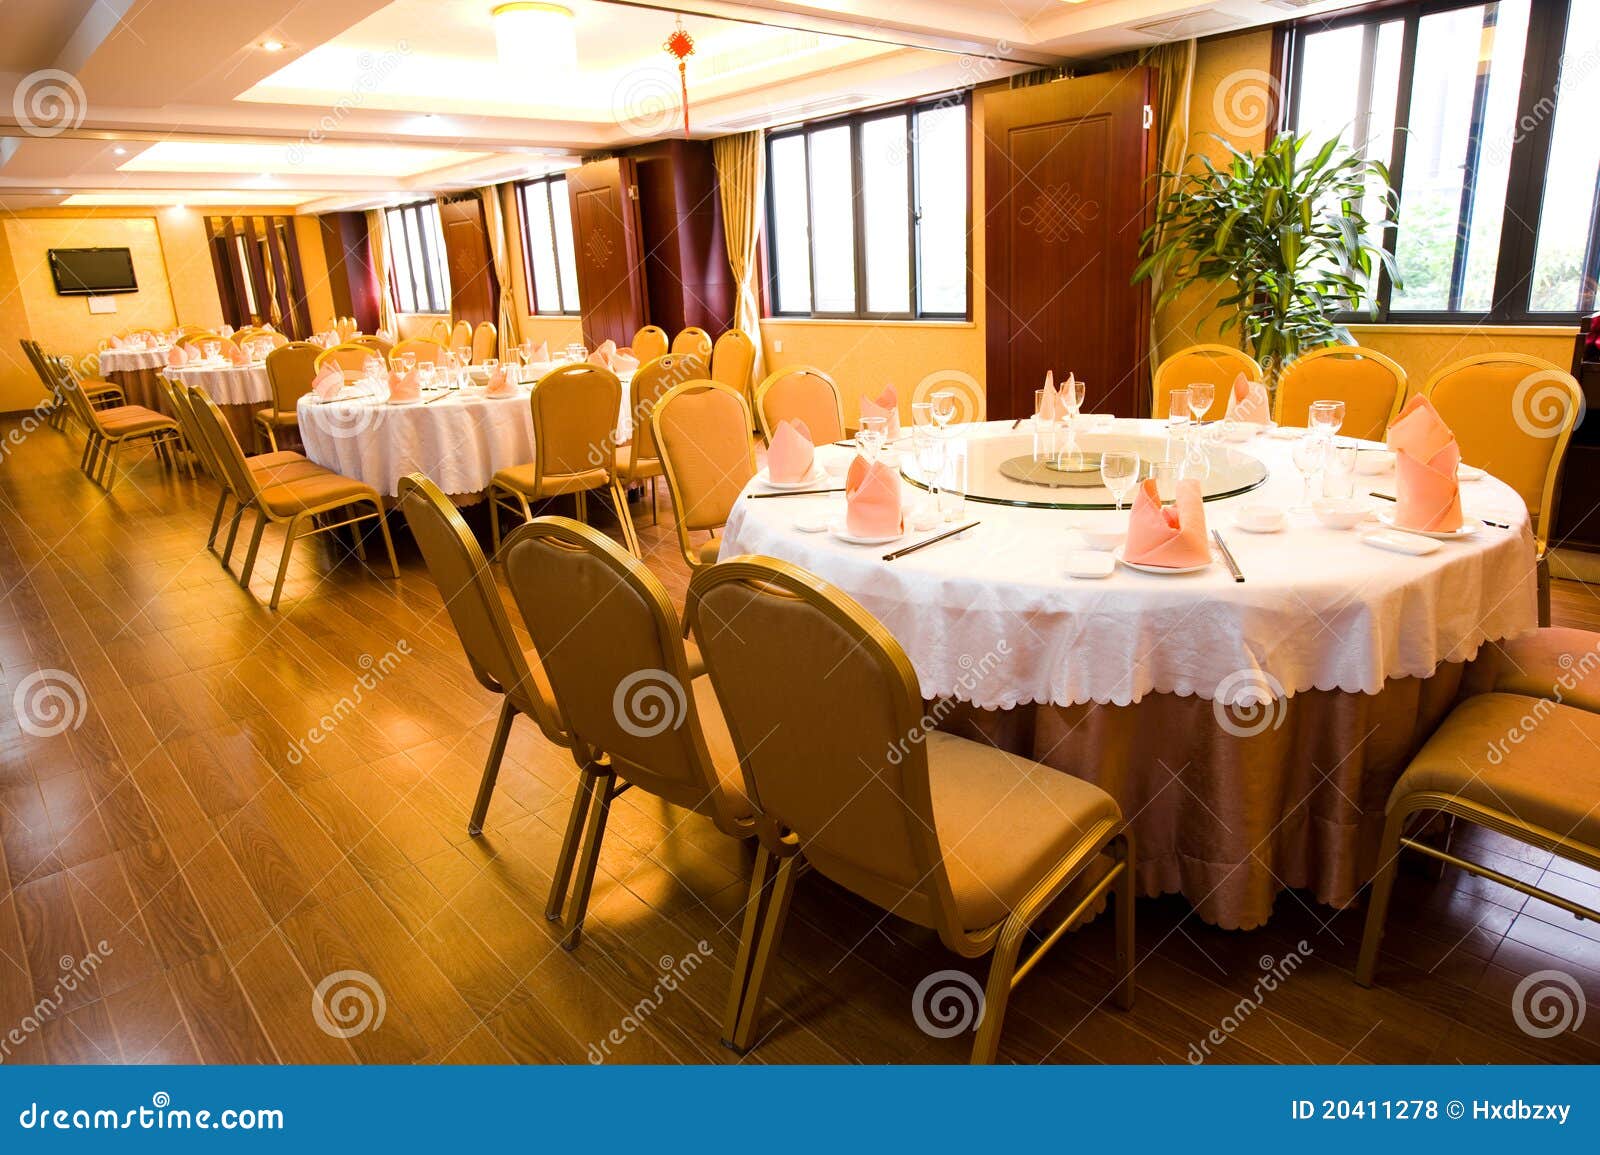 Chinese restaurant stock photo. Image of dining, interior - 20411278